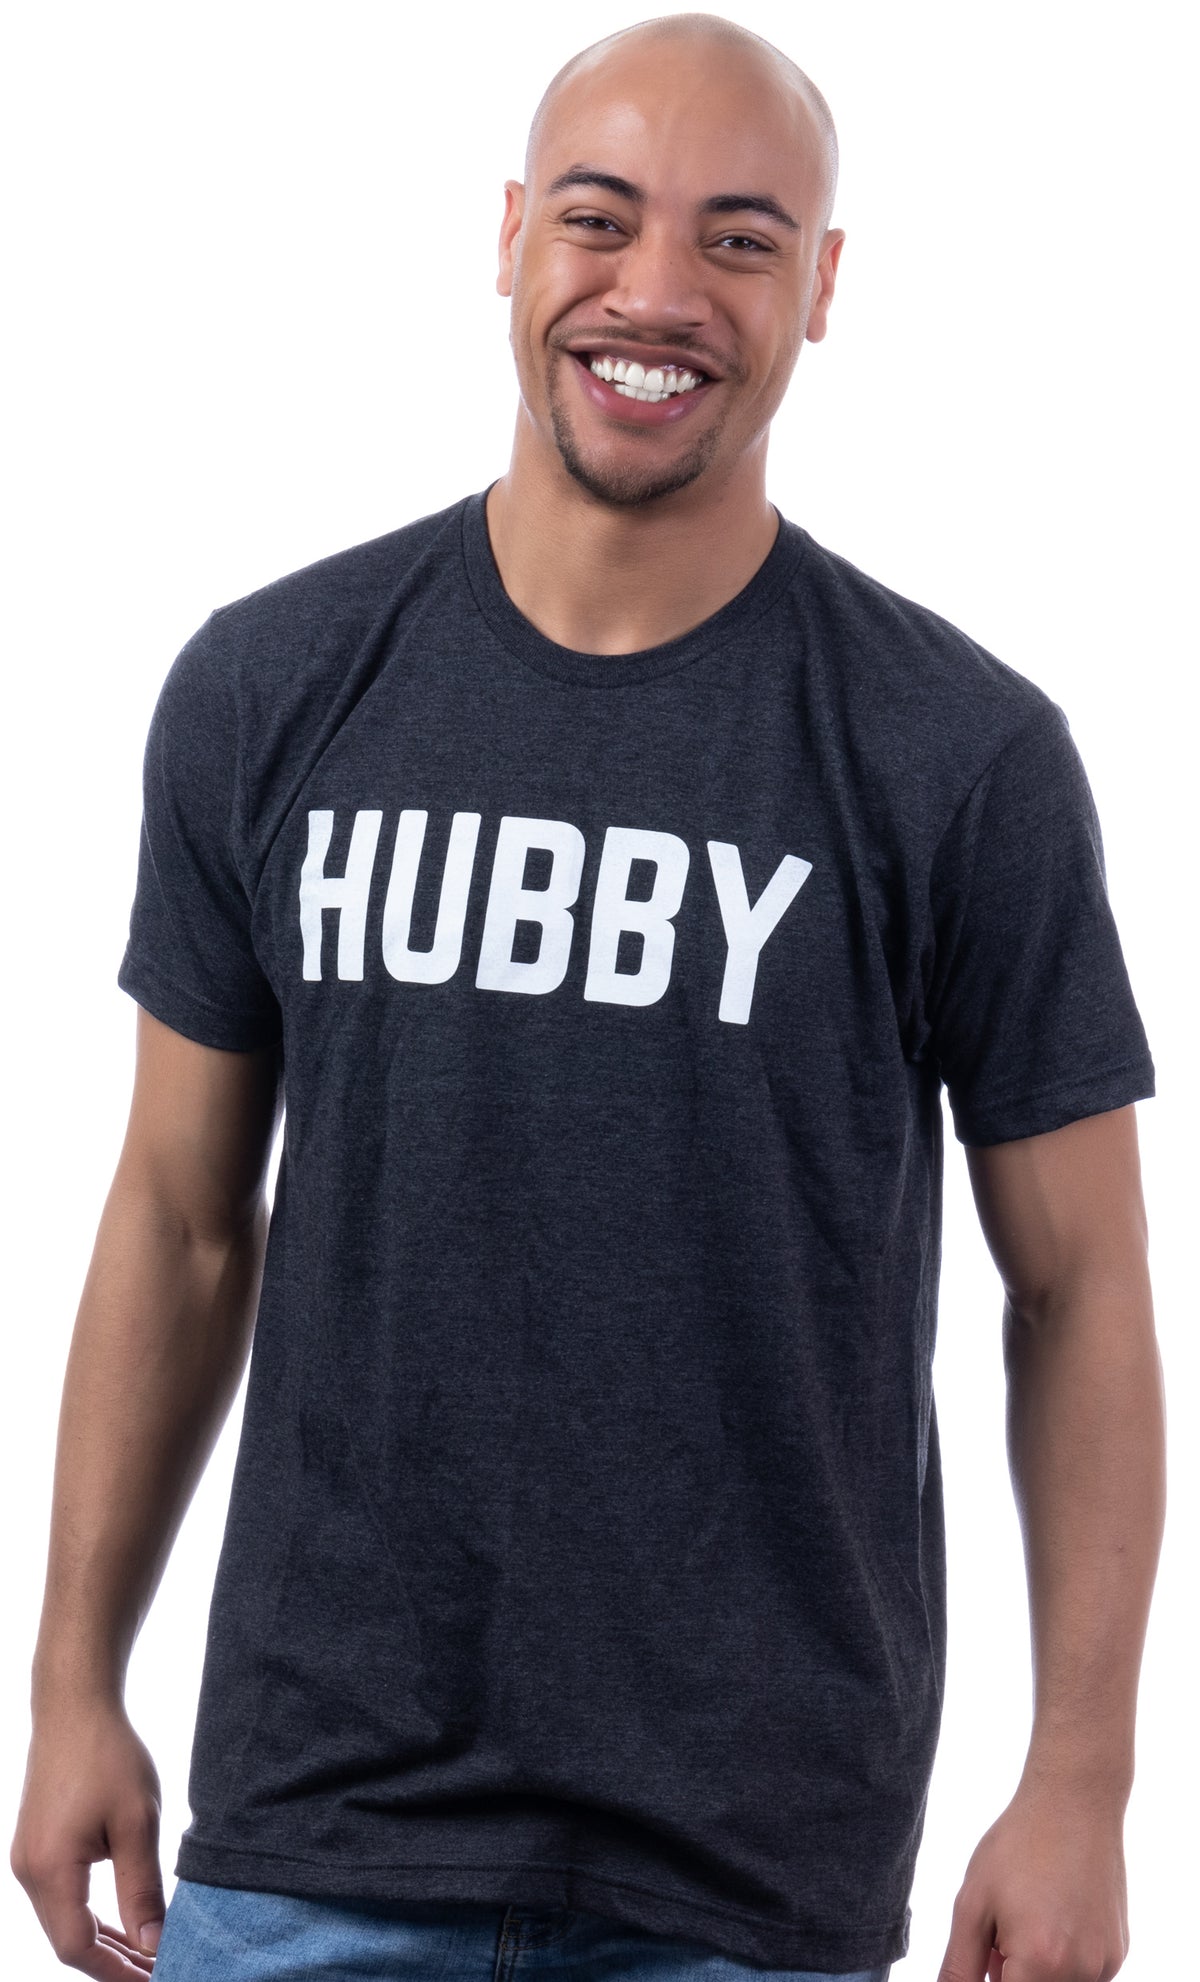 Hubby | Funny Dad Joke Groom Humor Marriage Anniversary Husband Saying Cute Dude Honeymoon Men's T-Shirt